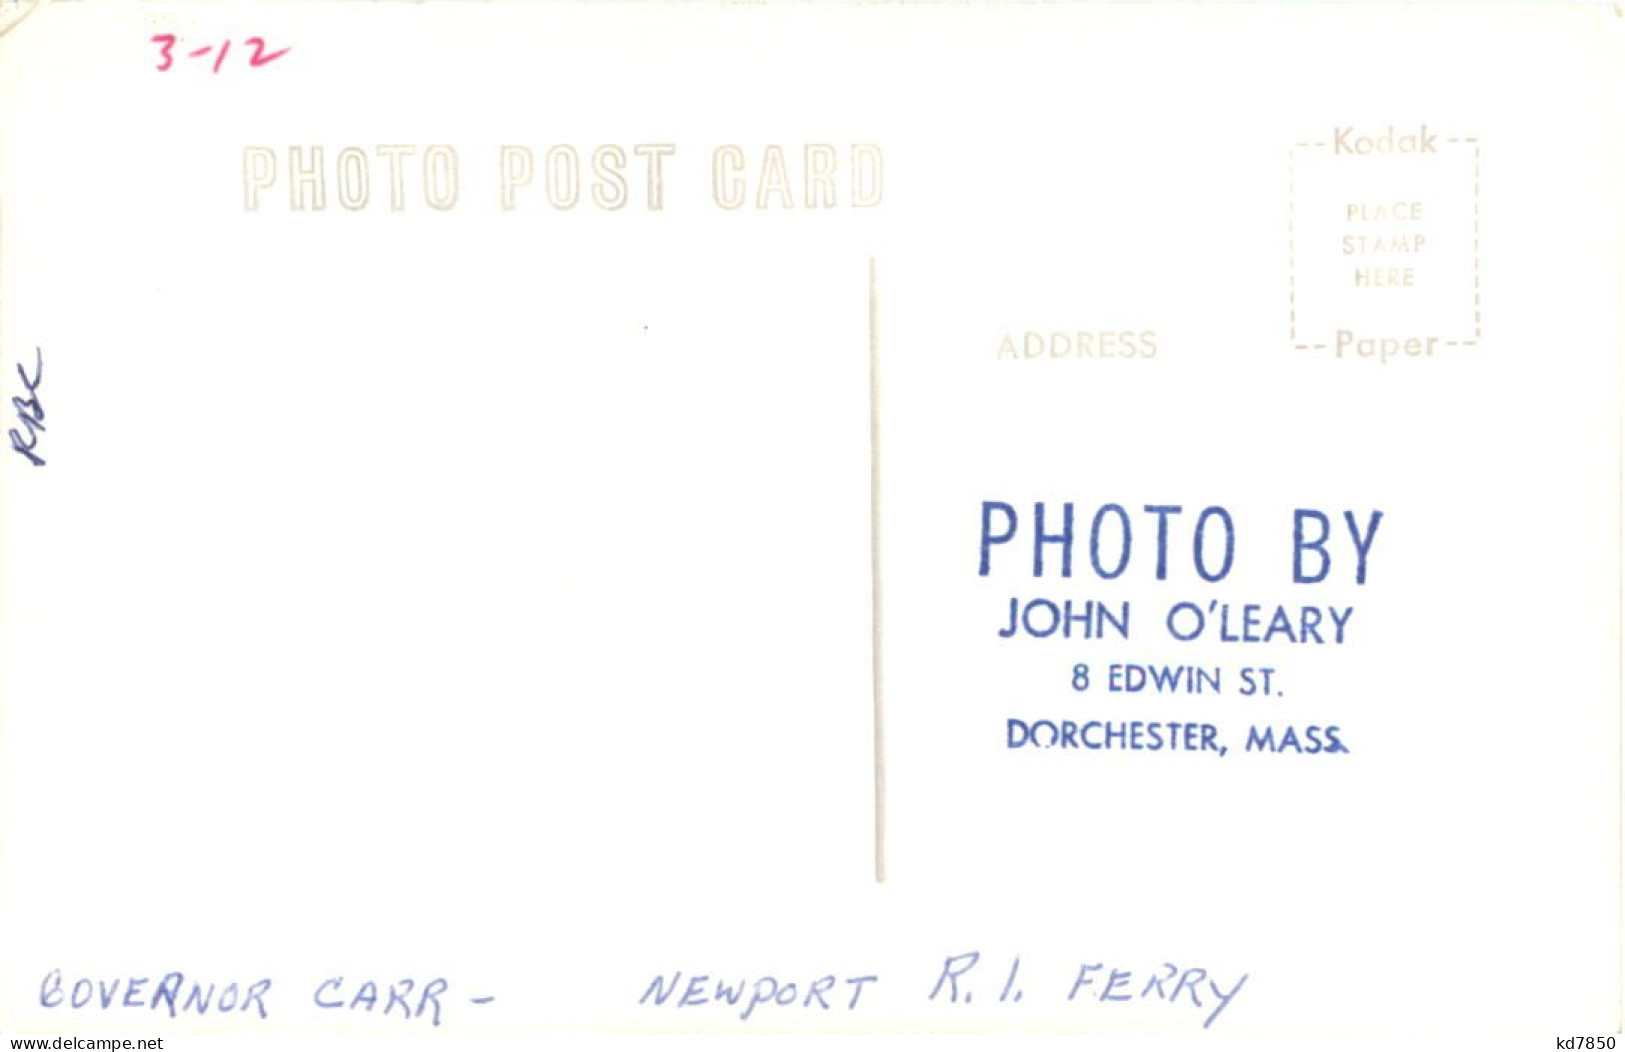 Governor Carr - Newport RI Ferry - Ferries